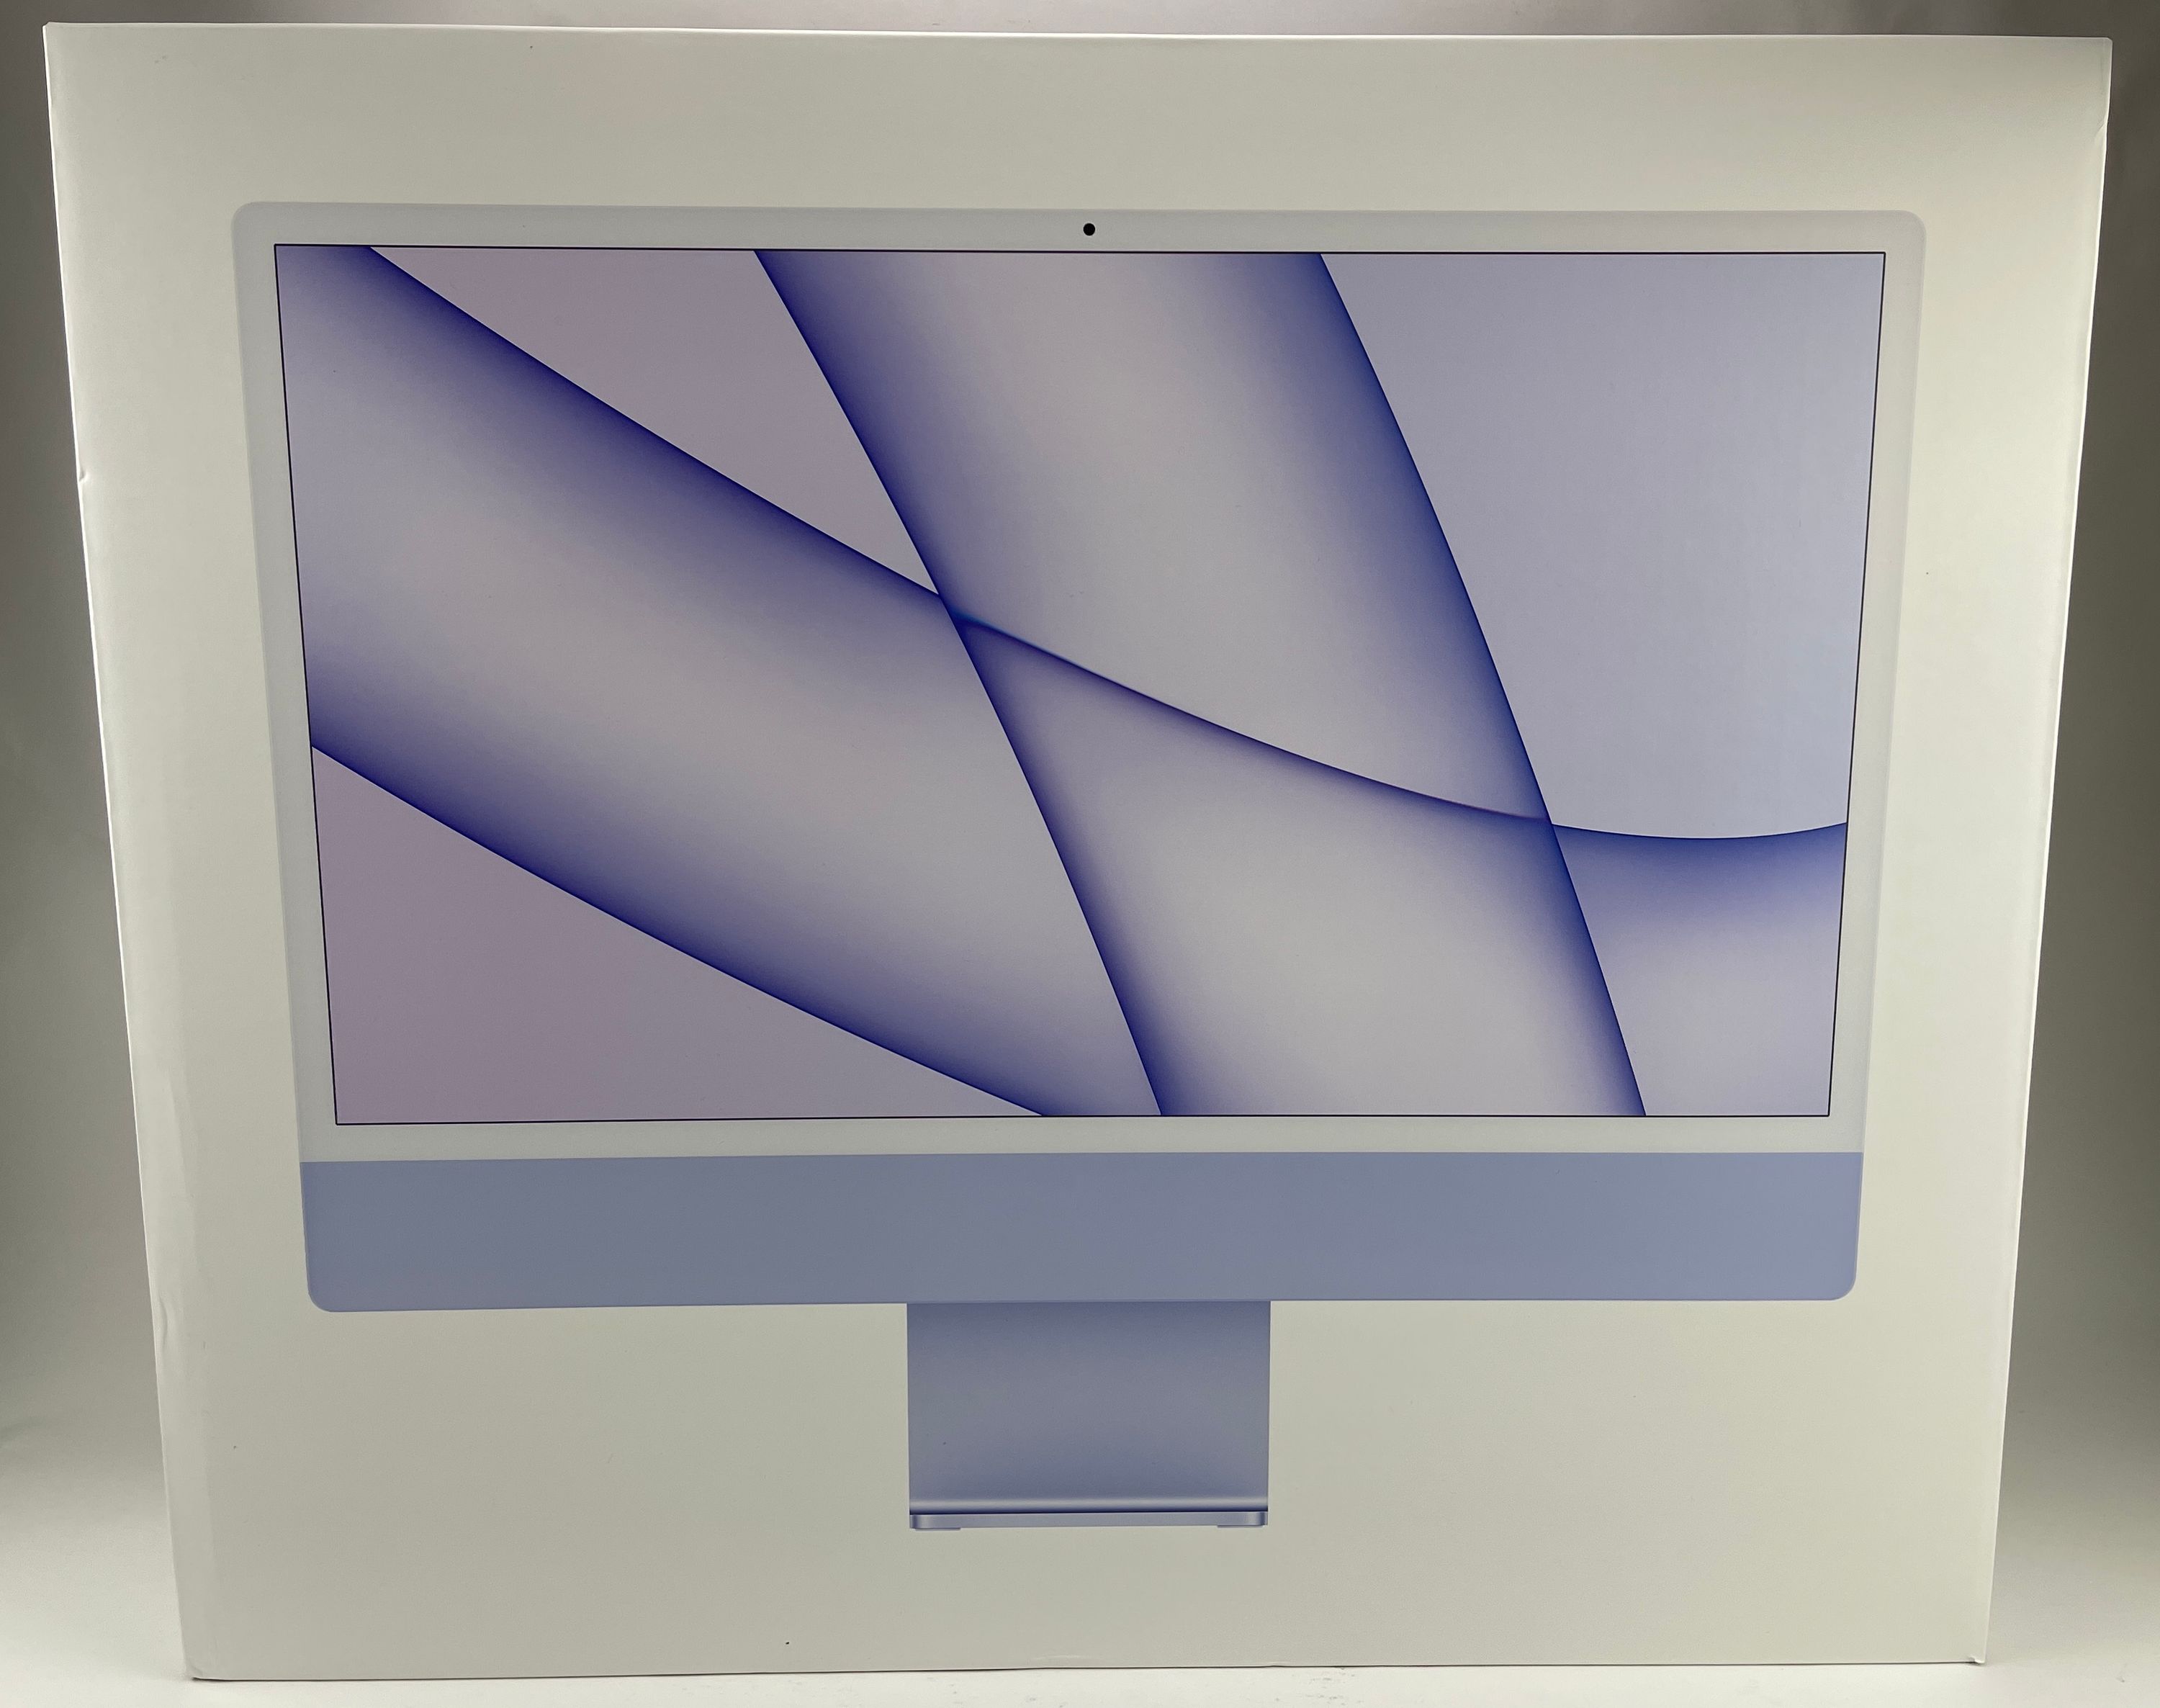 Apple iMac 24" (2021) M1 8-Core GPU - Violett